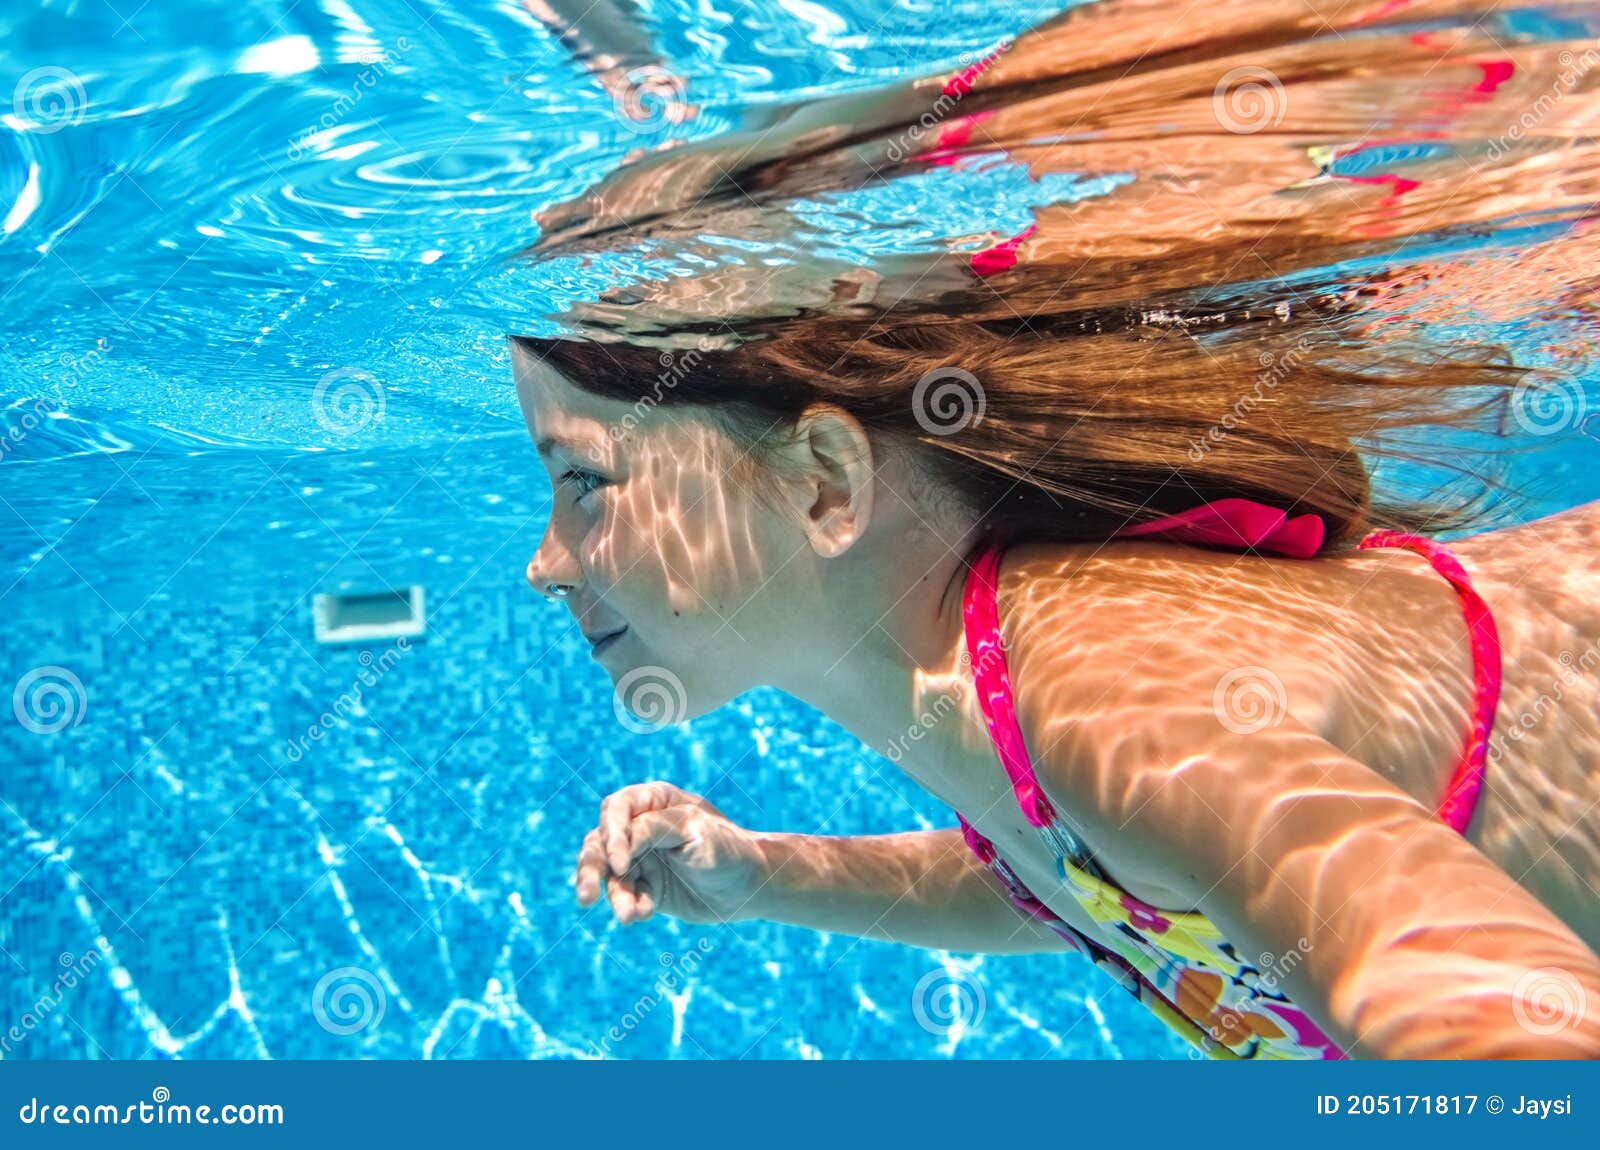 Child swims in pool underwater, happy active girl in 